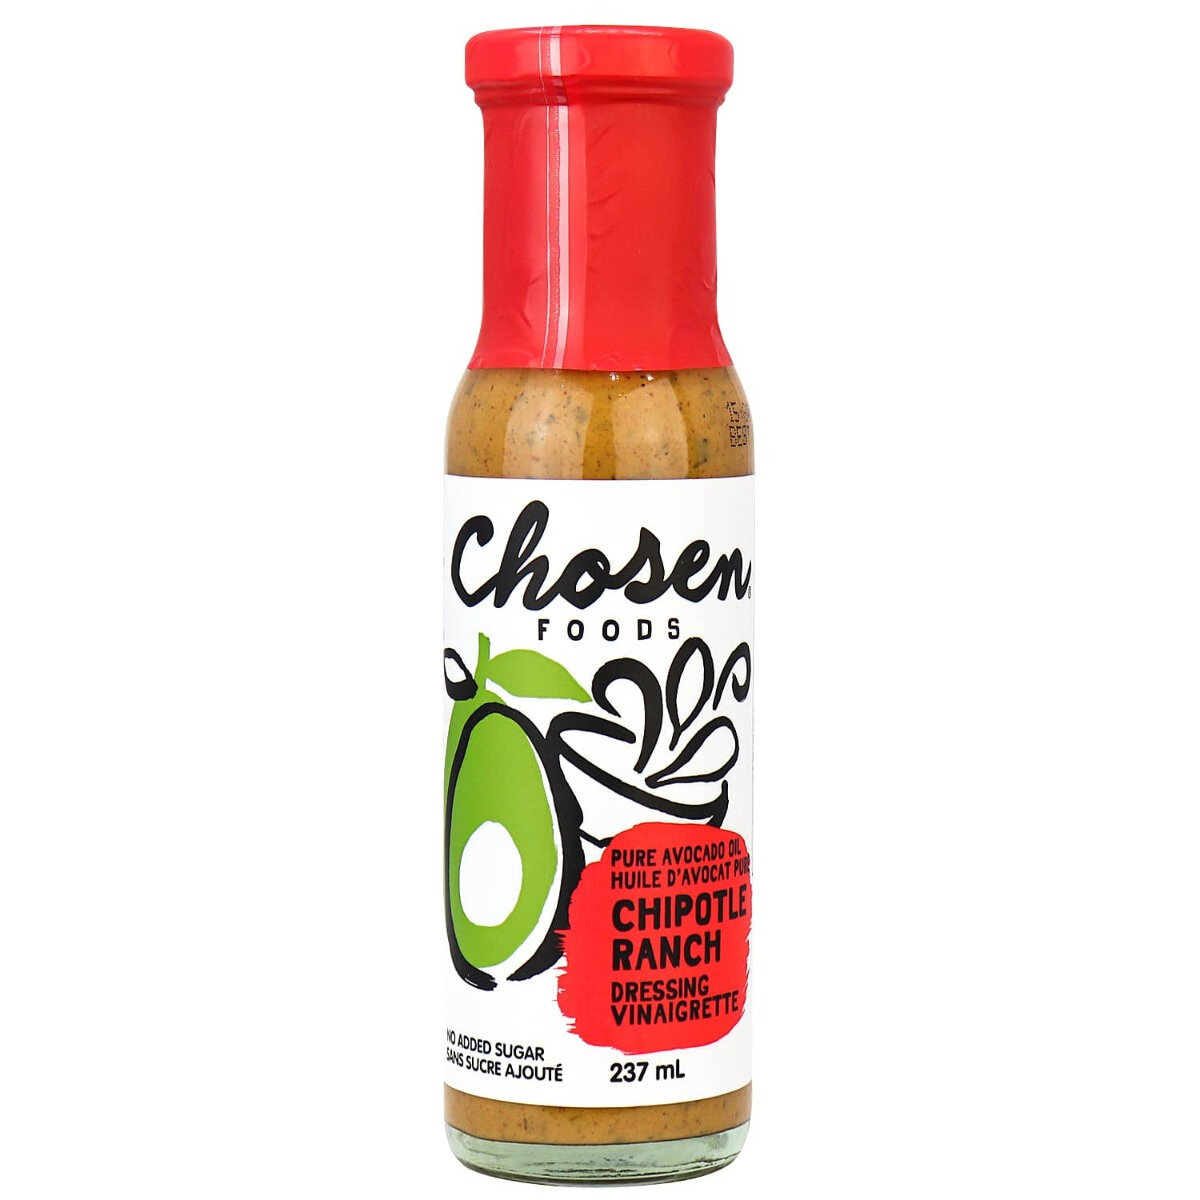 Chosen Foods - Chipotle Ranch 237ml